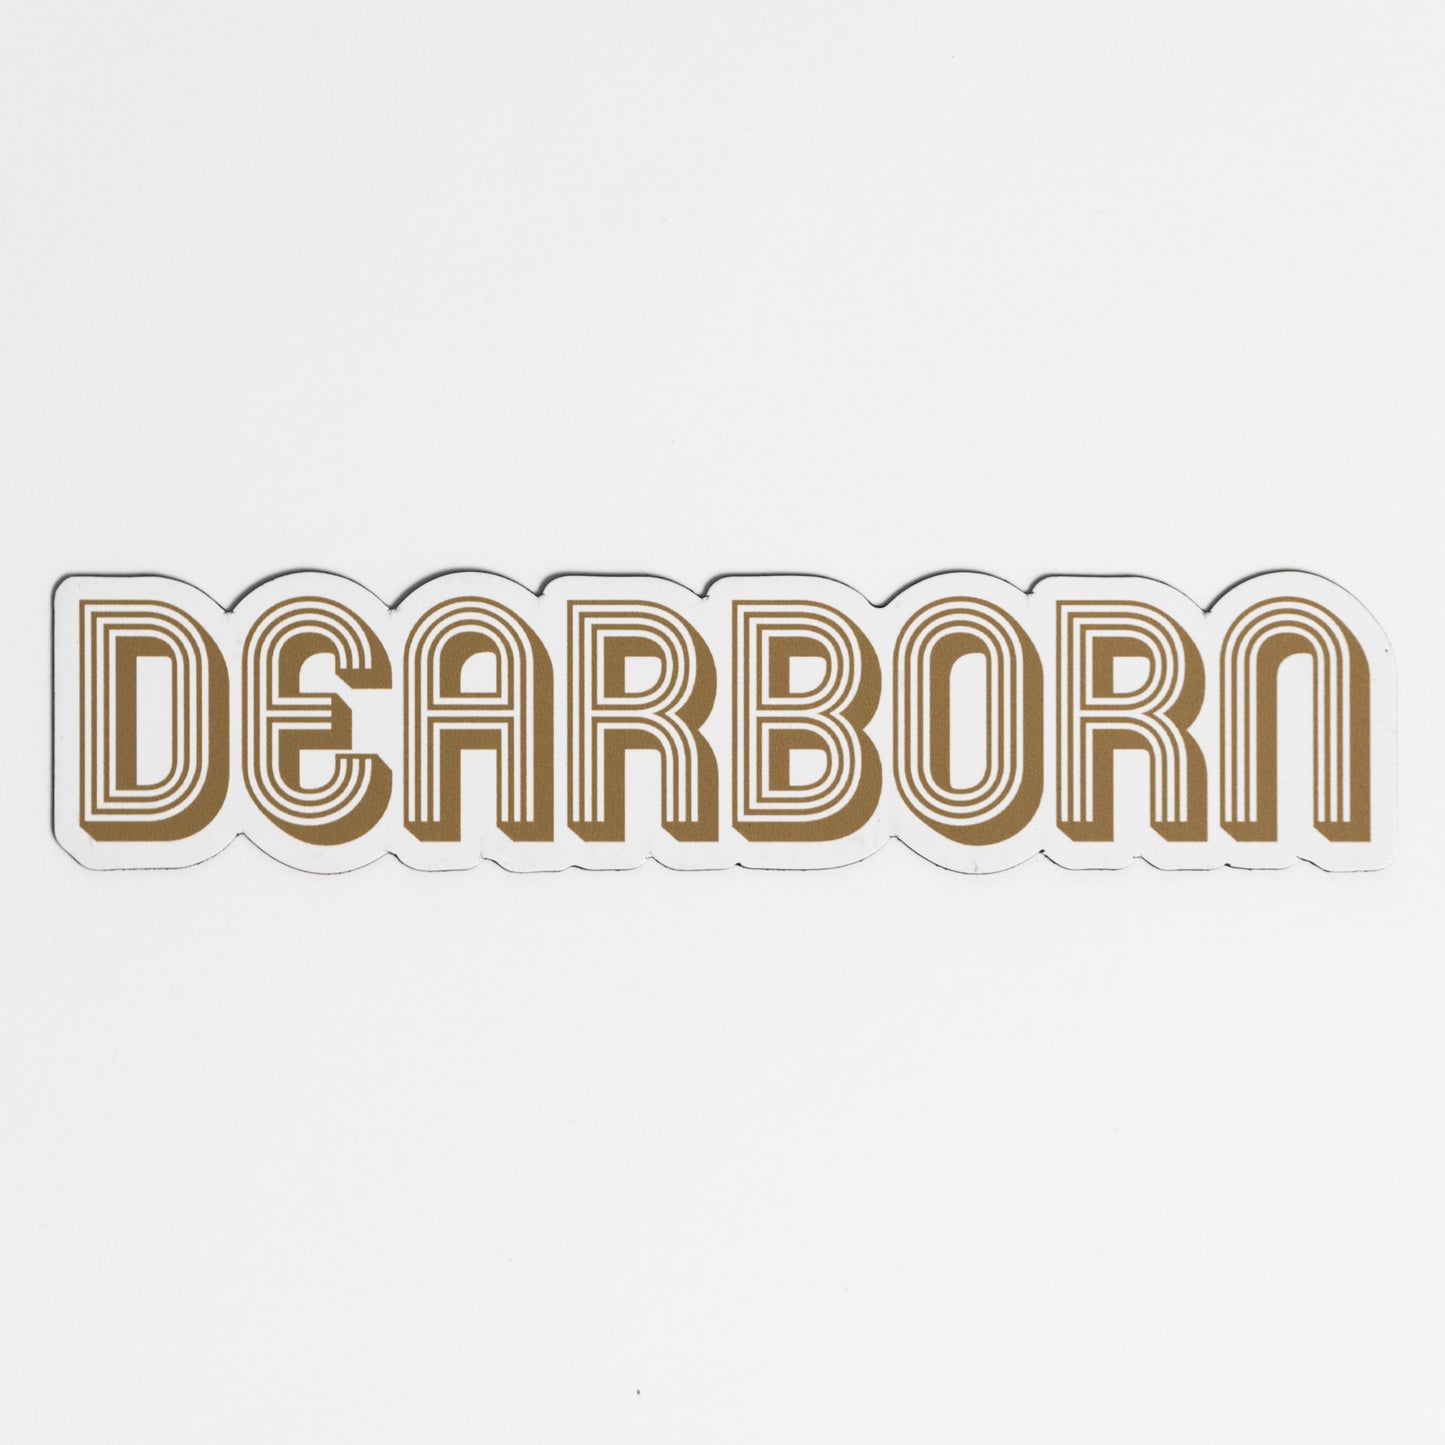 Retro Dearborn | Magnet